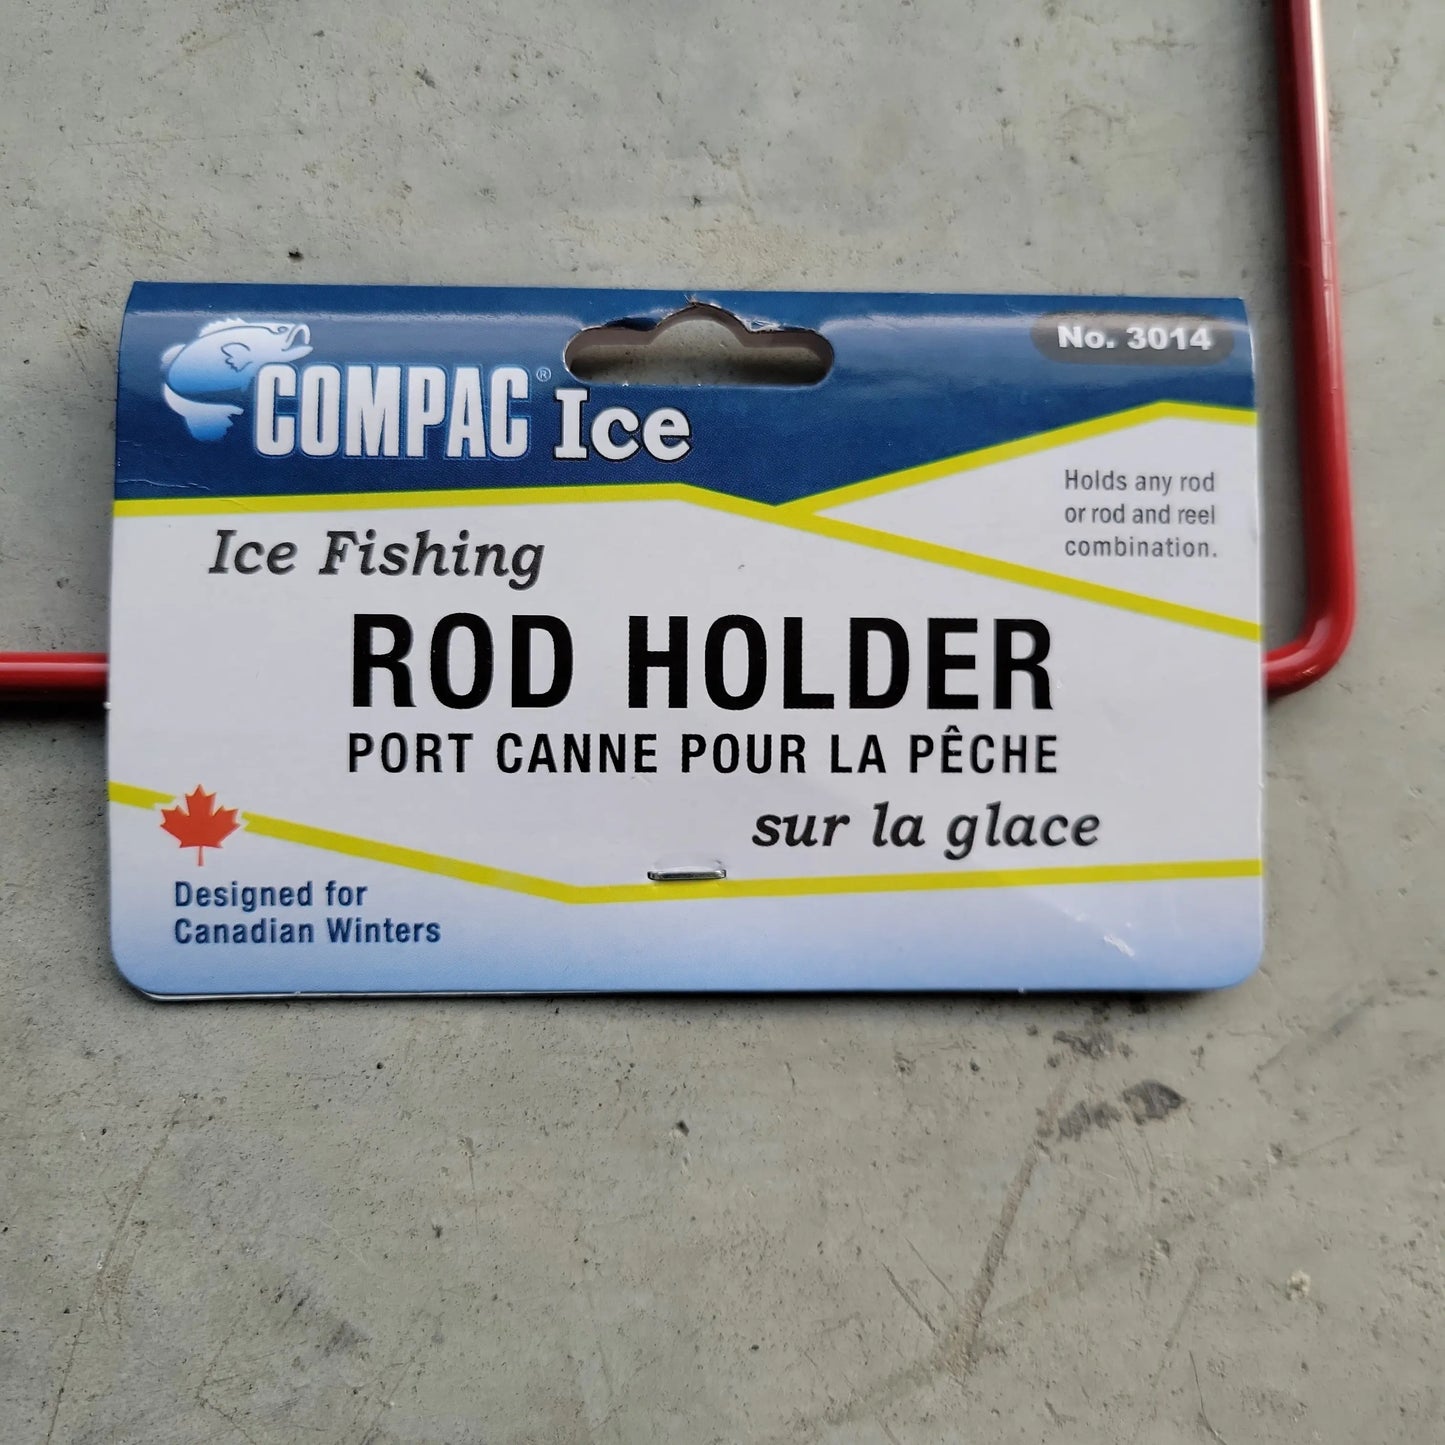 COMPAC Ice Rod Holder 7" C.G. Emery